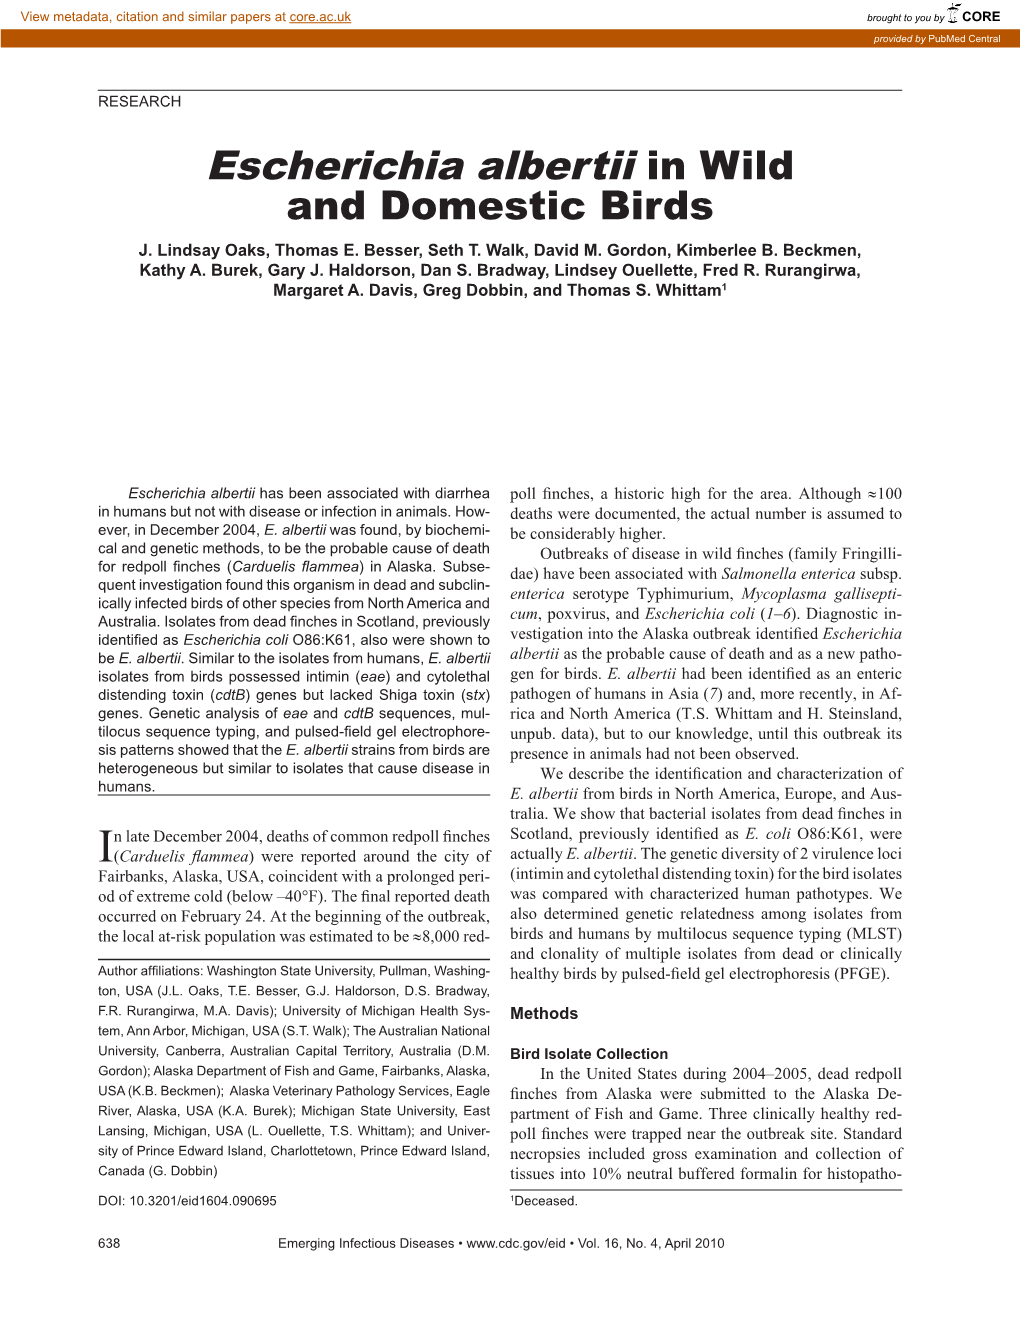 Escherichia Albertii in Wild and Domestic Birds J